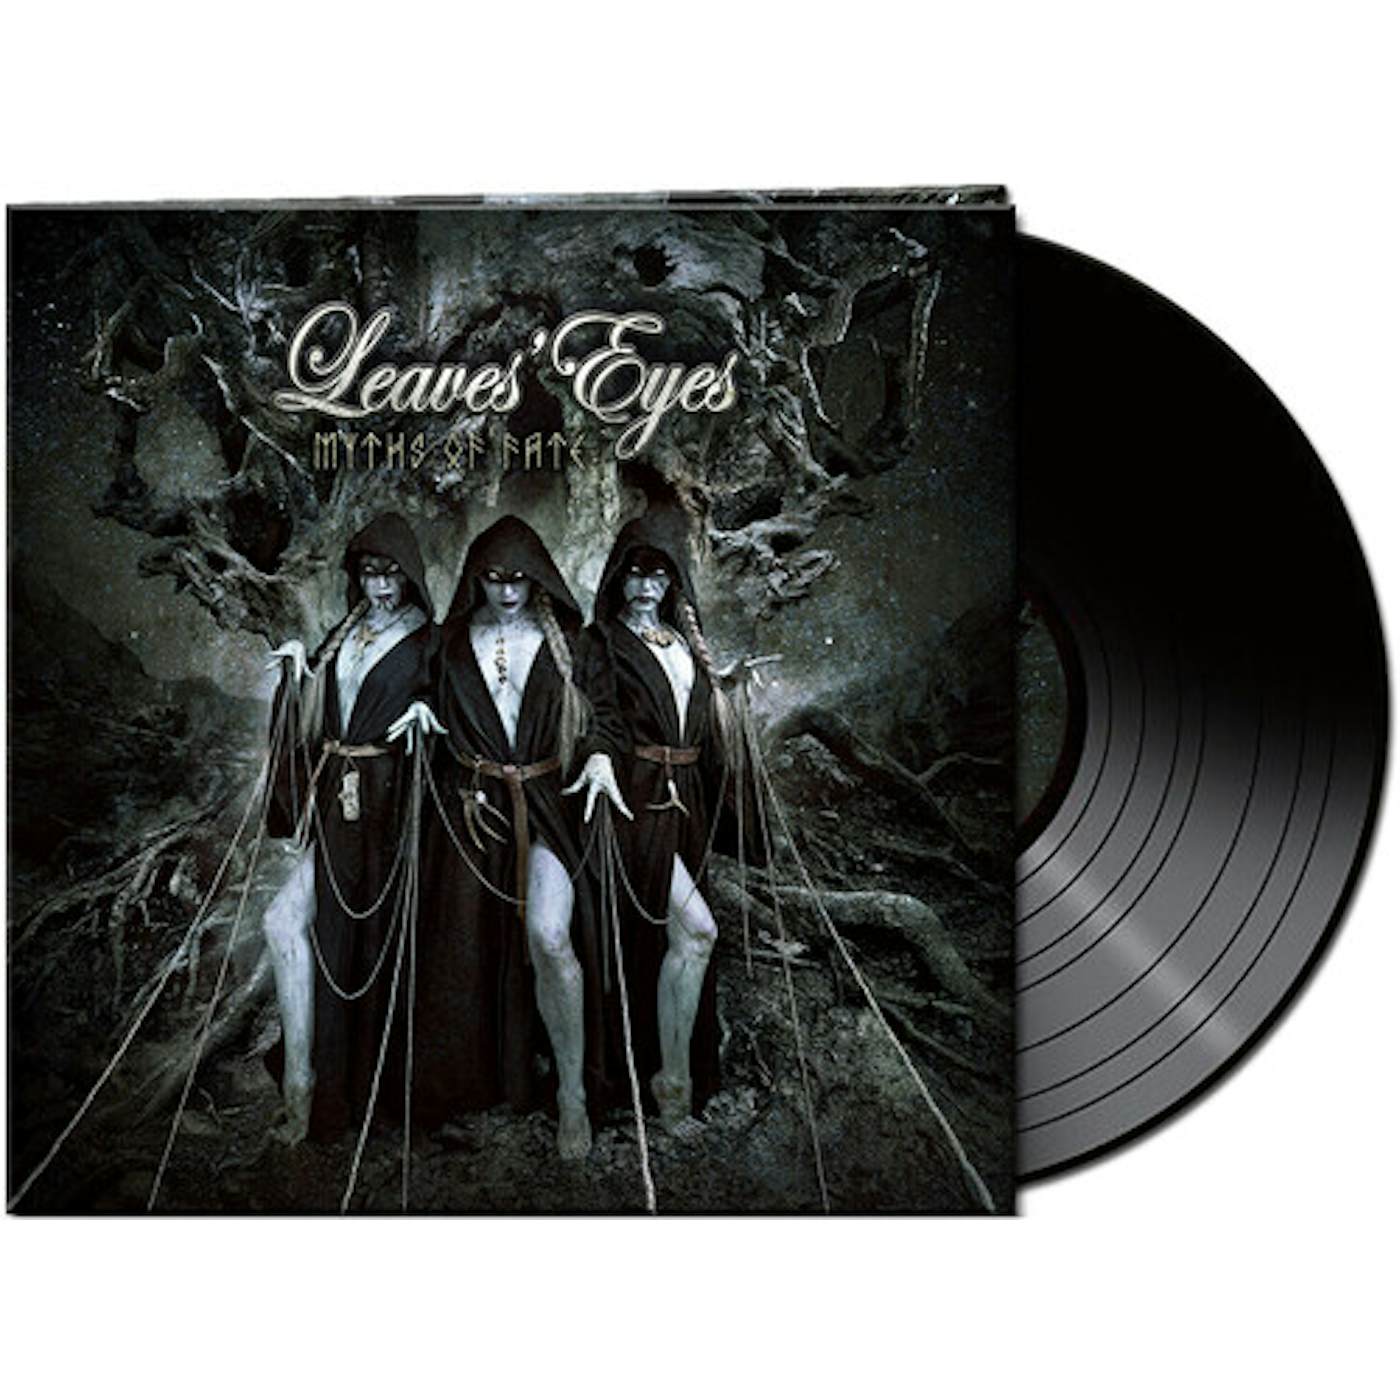 Leaves' Eyes MYTHS OF FATE Vinyl Record - Black Vinyl, Gatefold Sleeve, Limited Edition